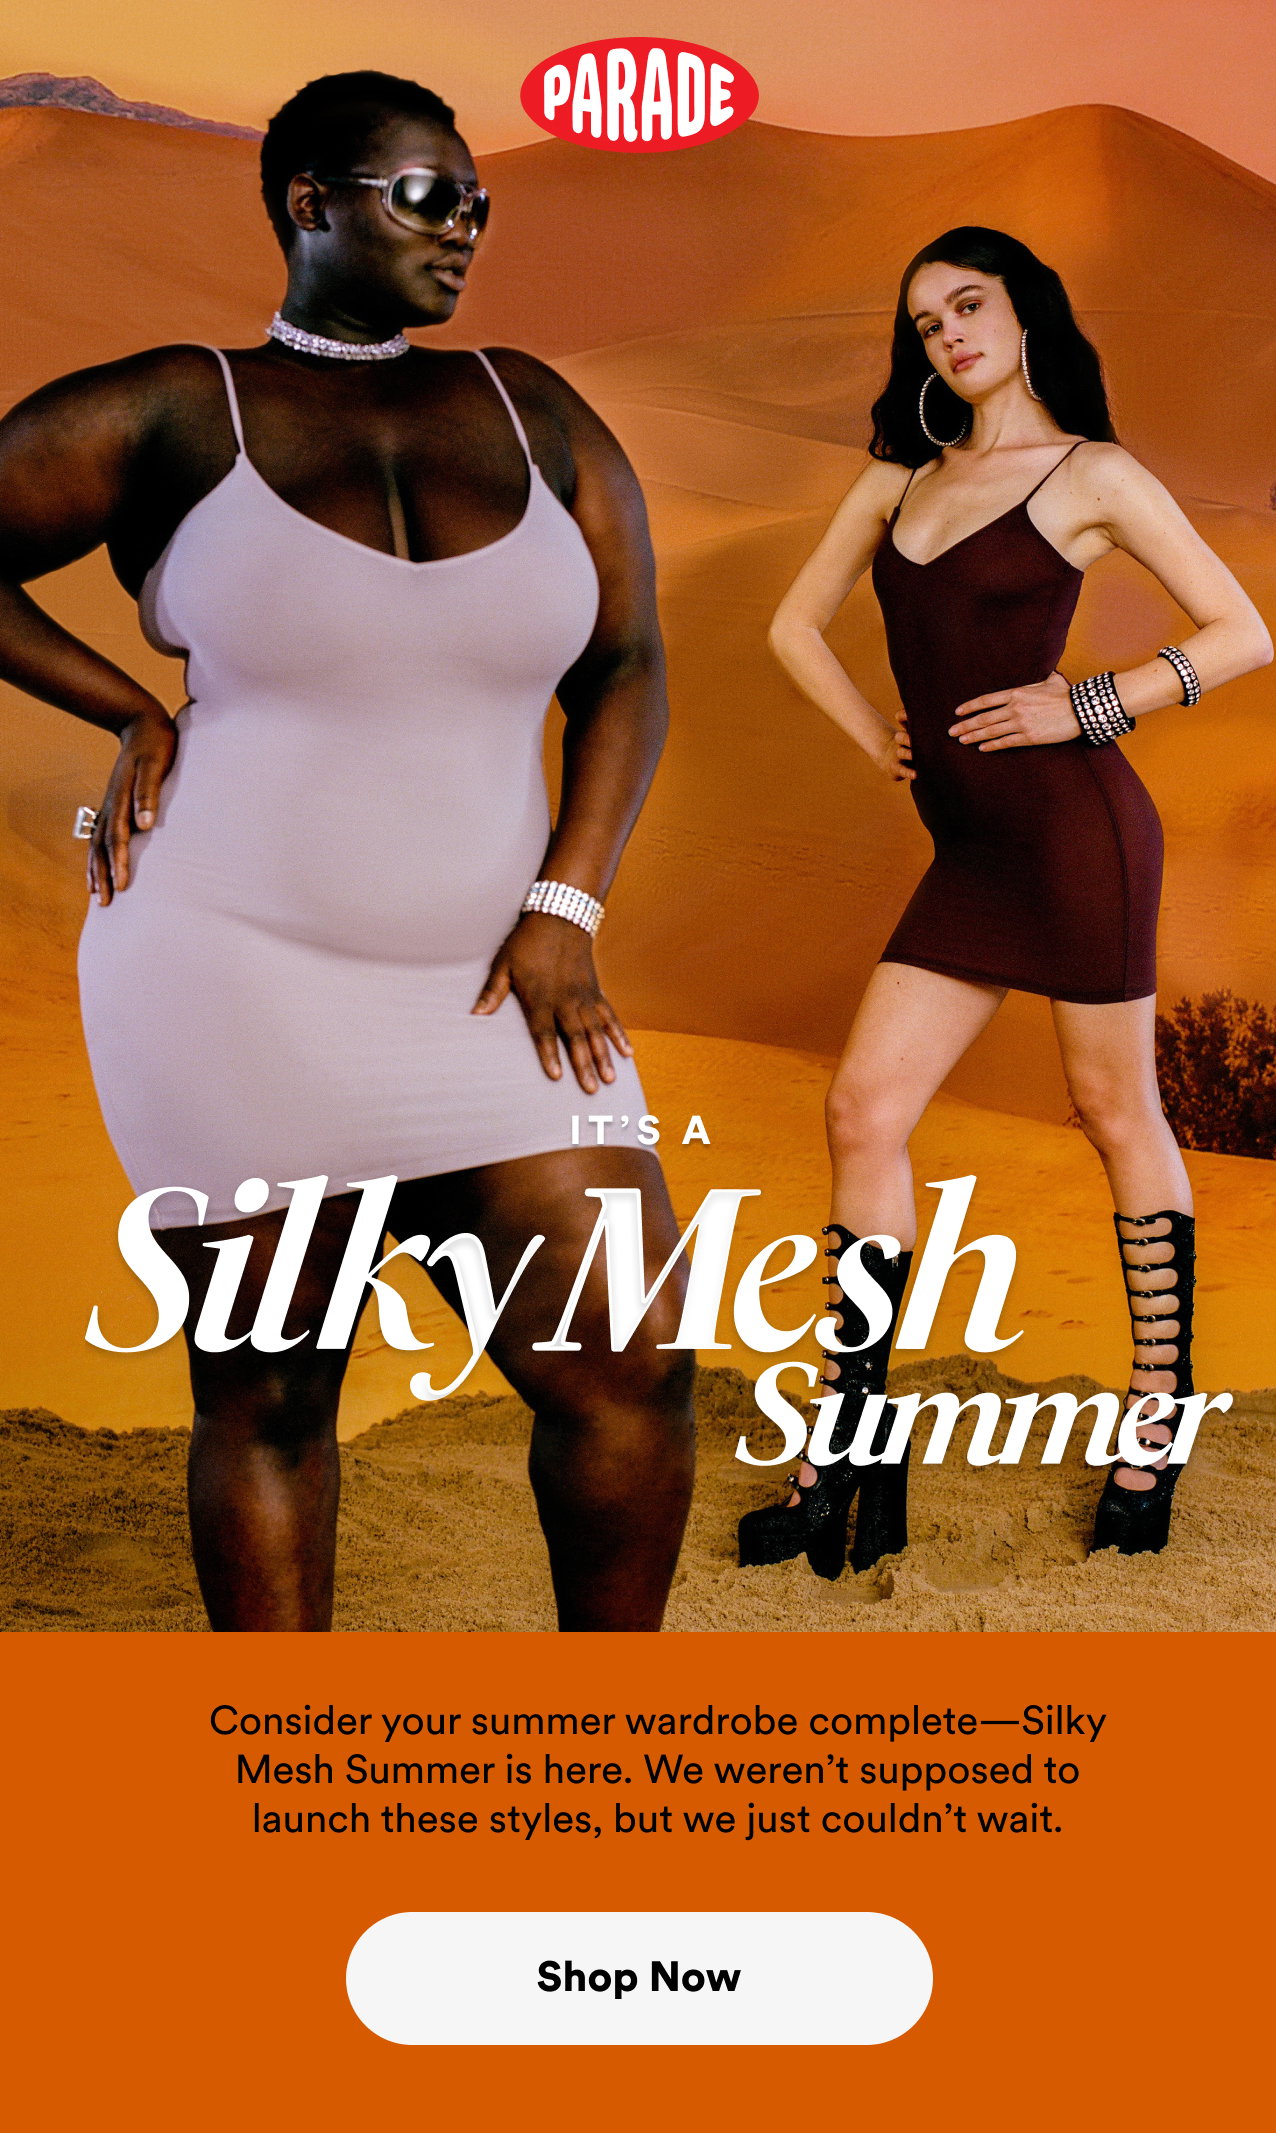 Parade: Brand New Silky Mesh Meet Silky Mesh Summer.